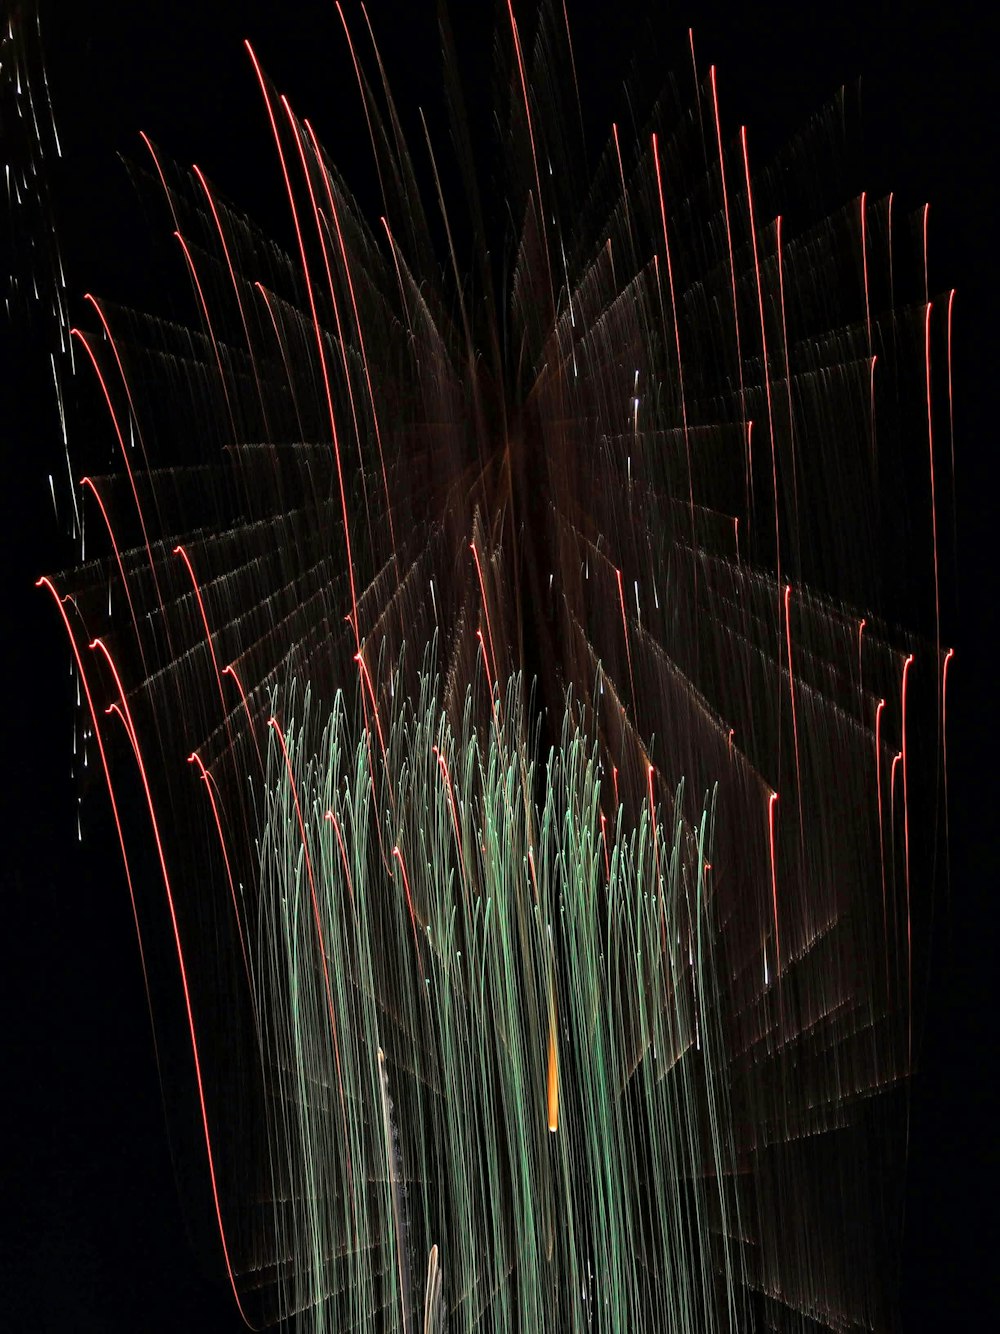 a close-up of a firework display